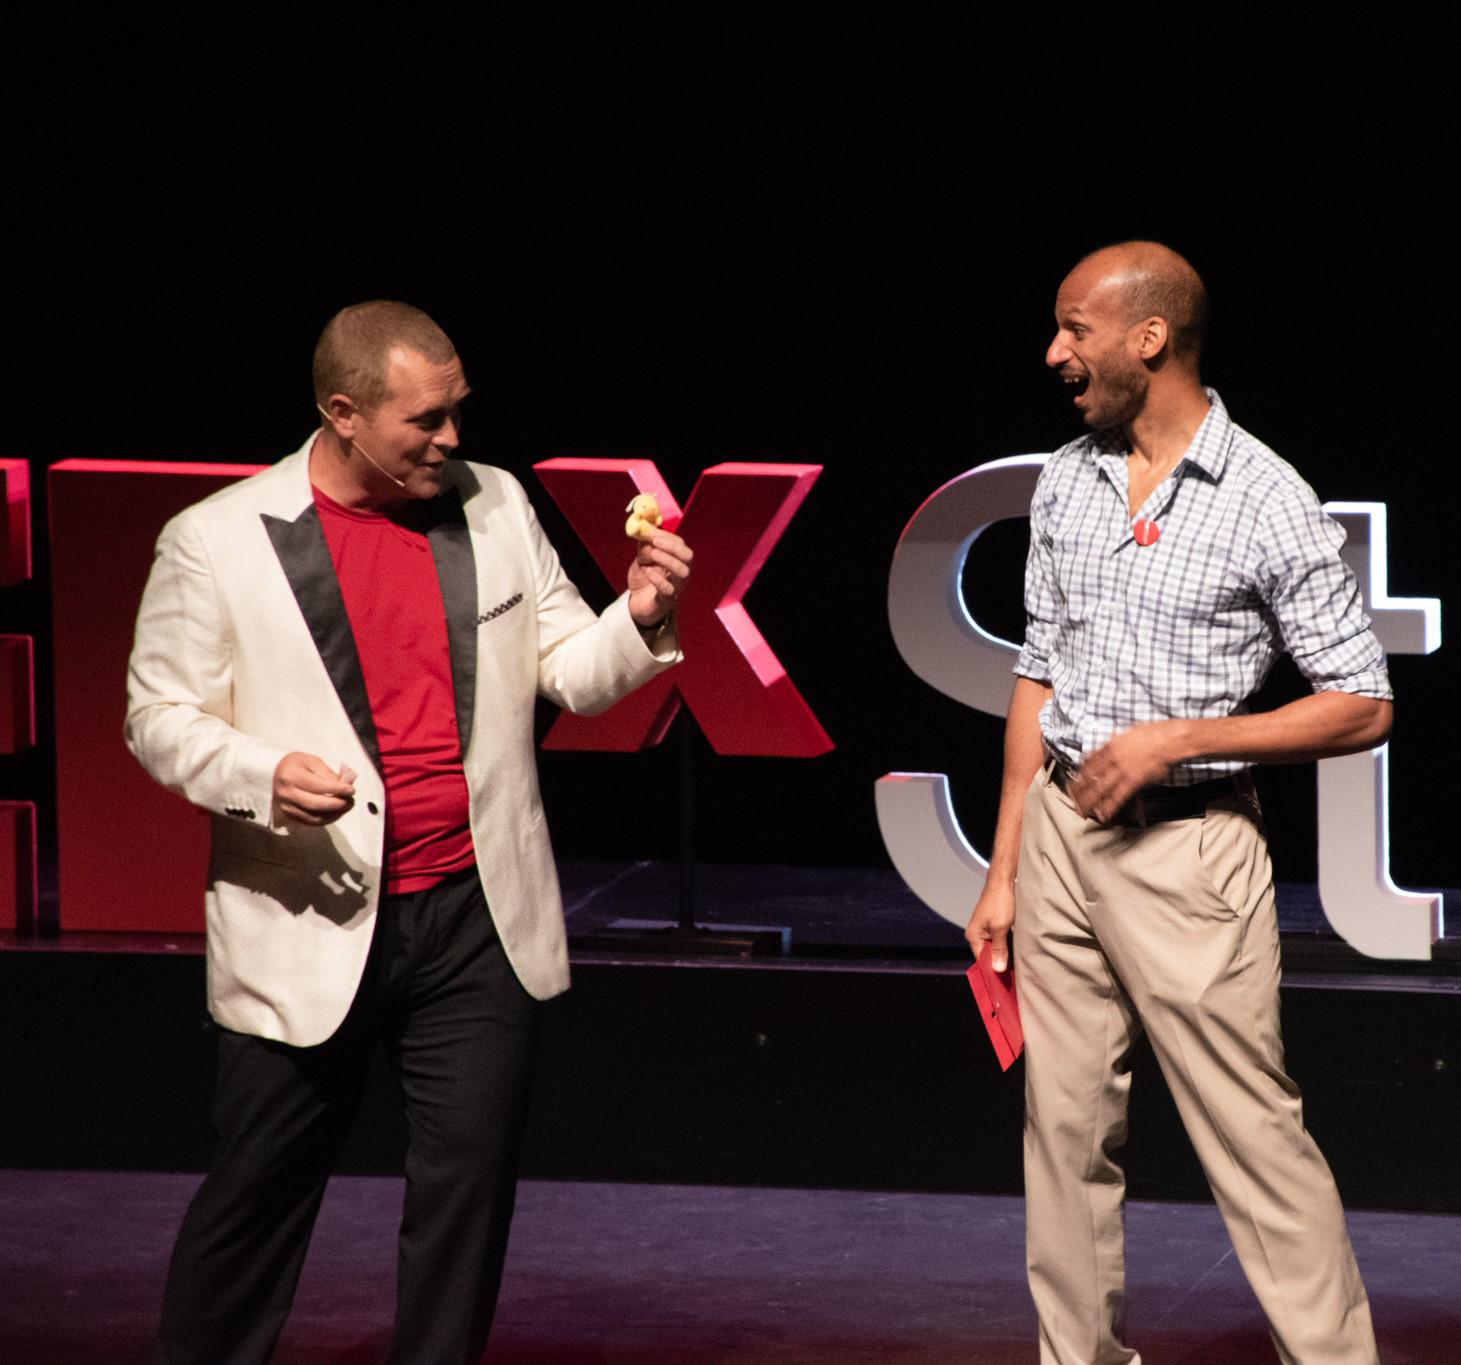 Joshua Routh TEDx Surprise